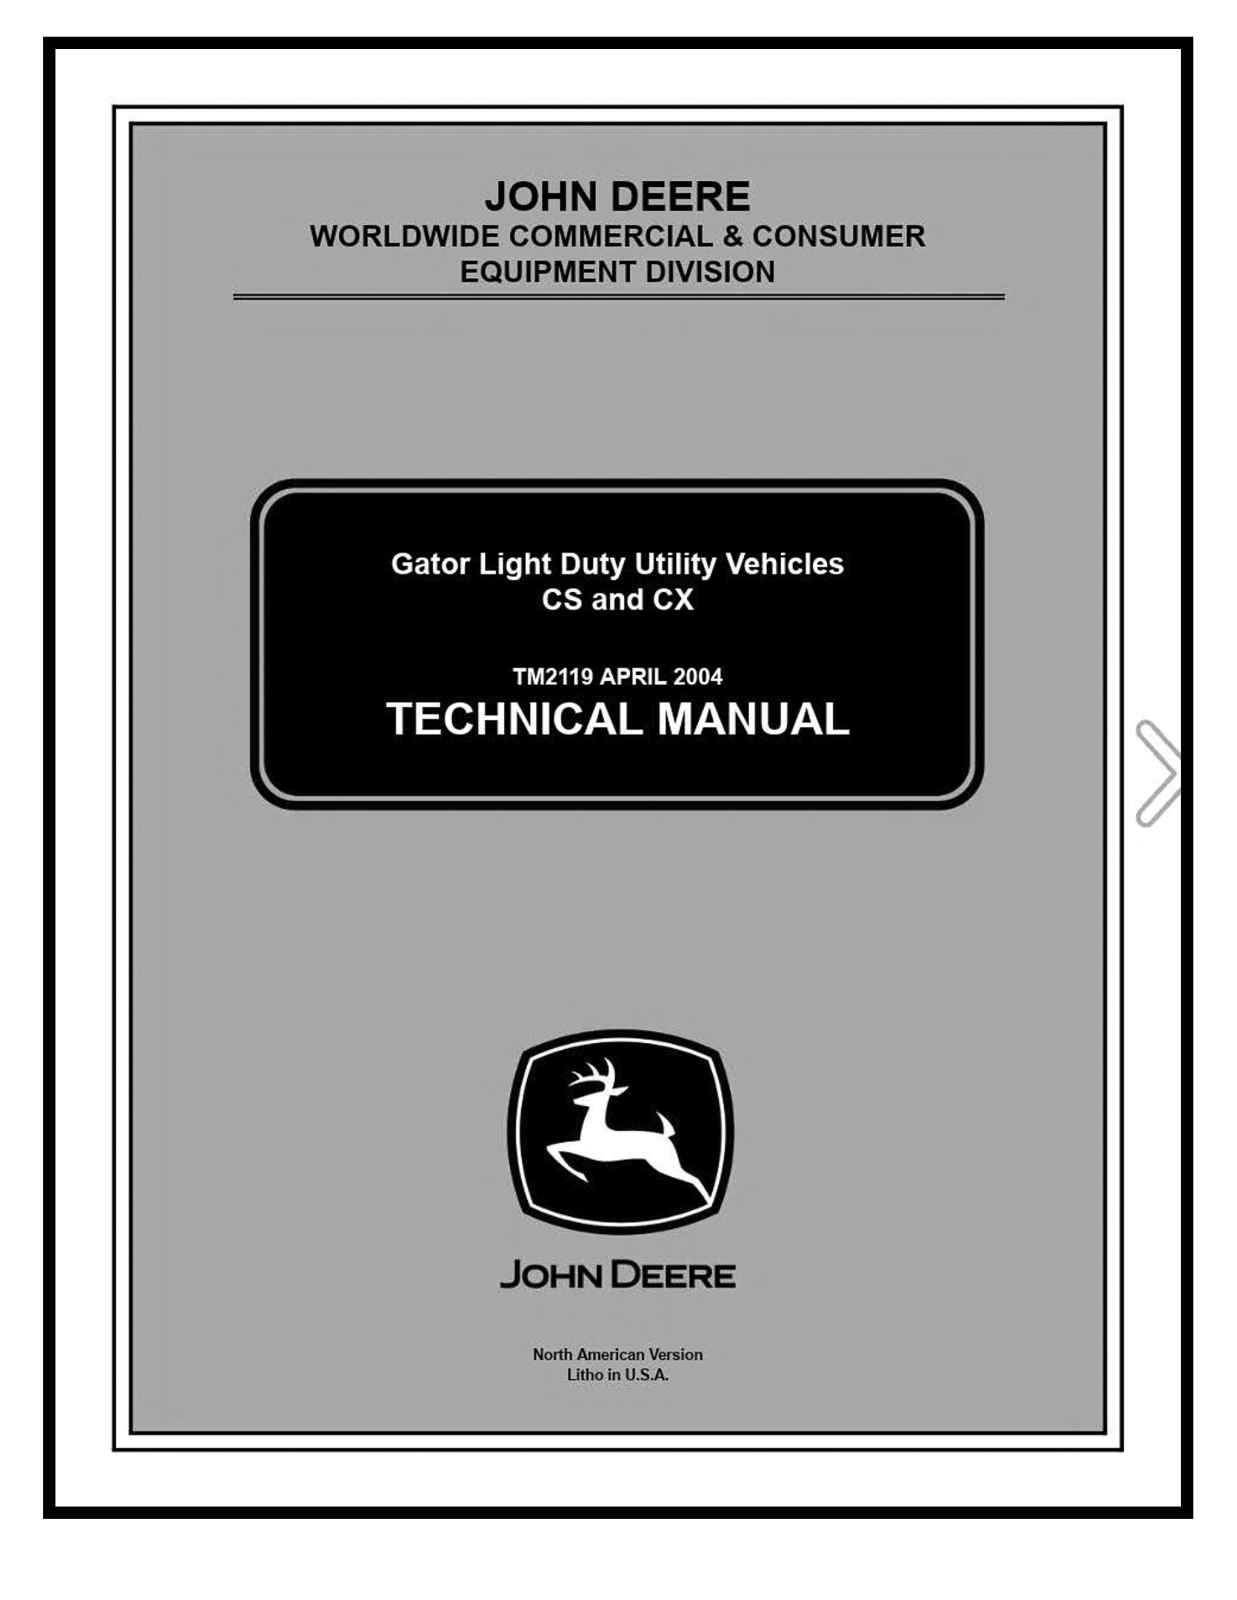 John Deere Gator Light Utility Vehicles CS and CX Technical Manual